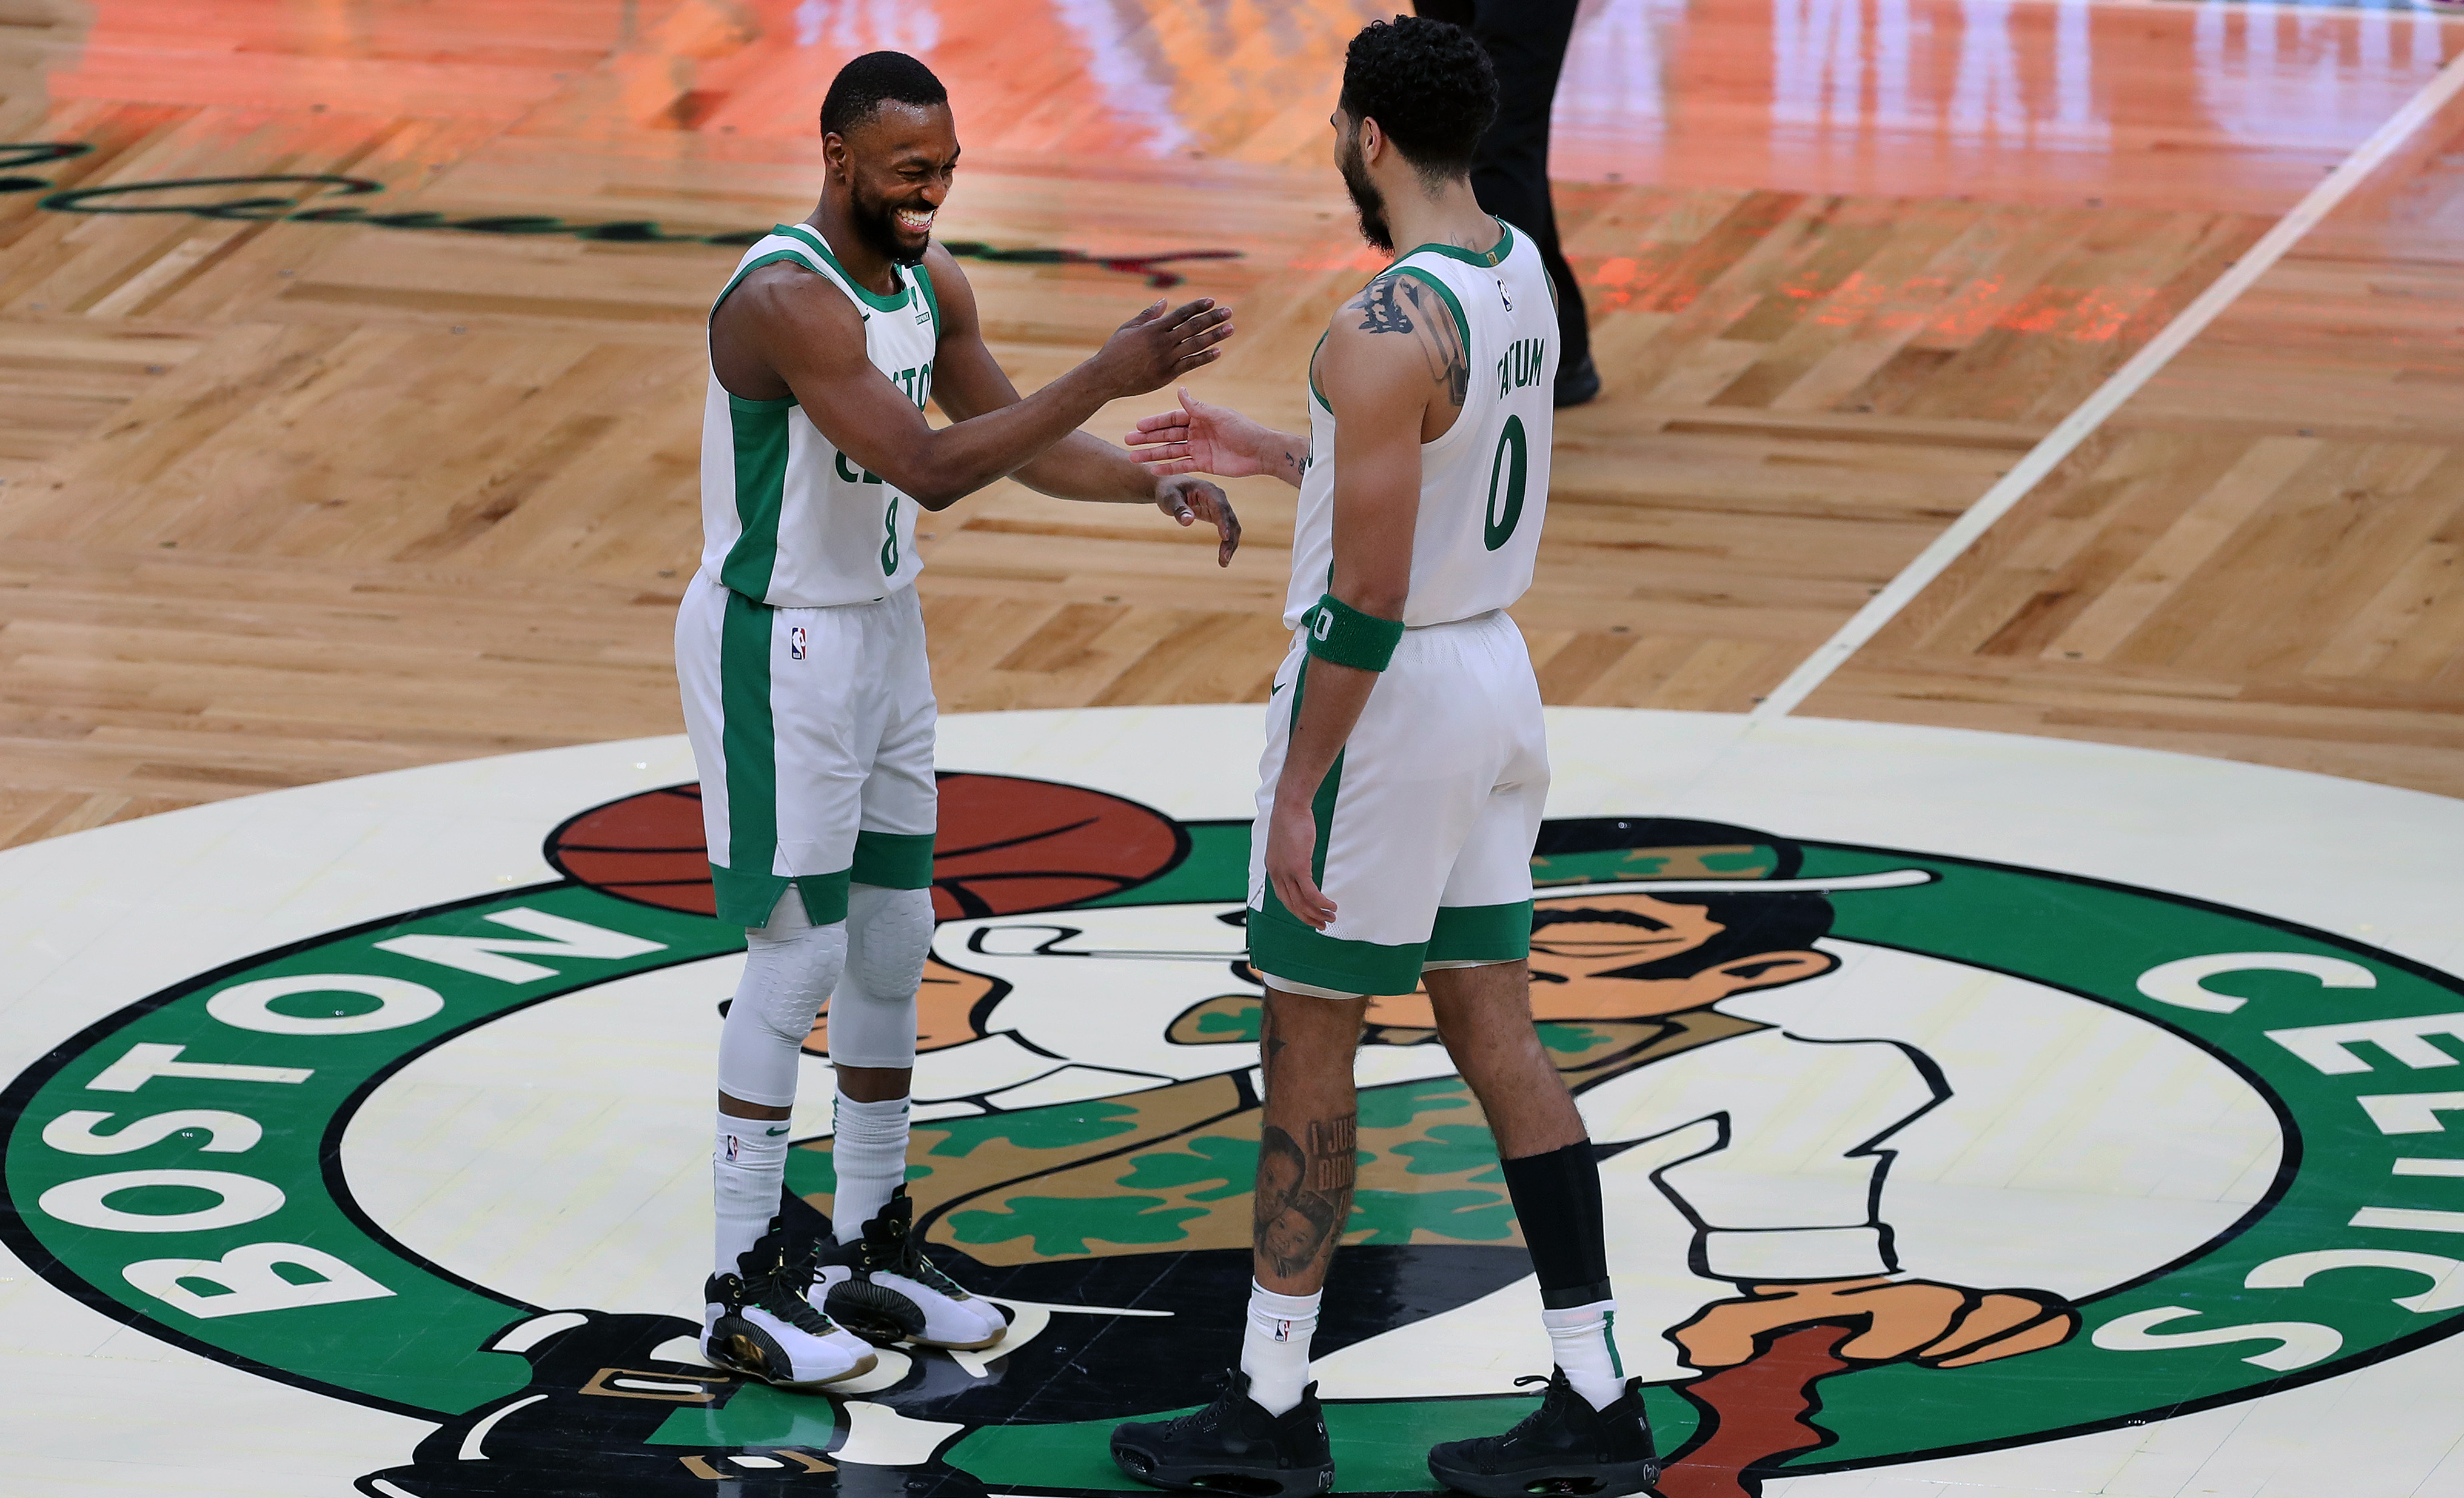 Celtics: Kemba Walker is set to return to New England as free agent season  opens